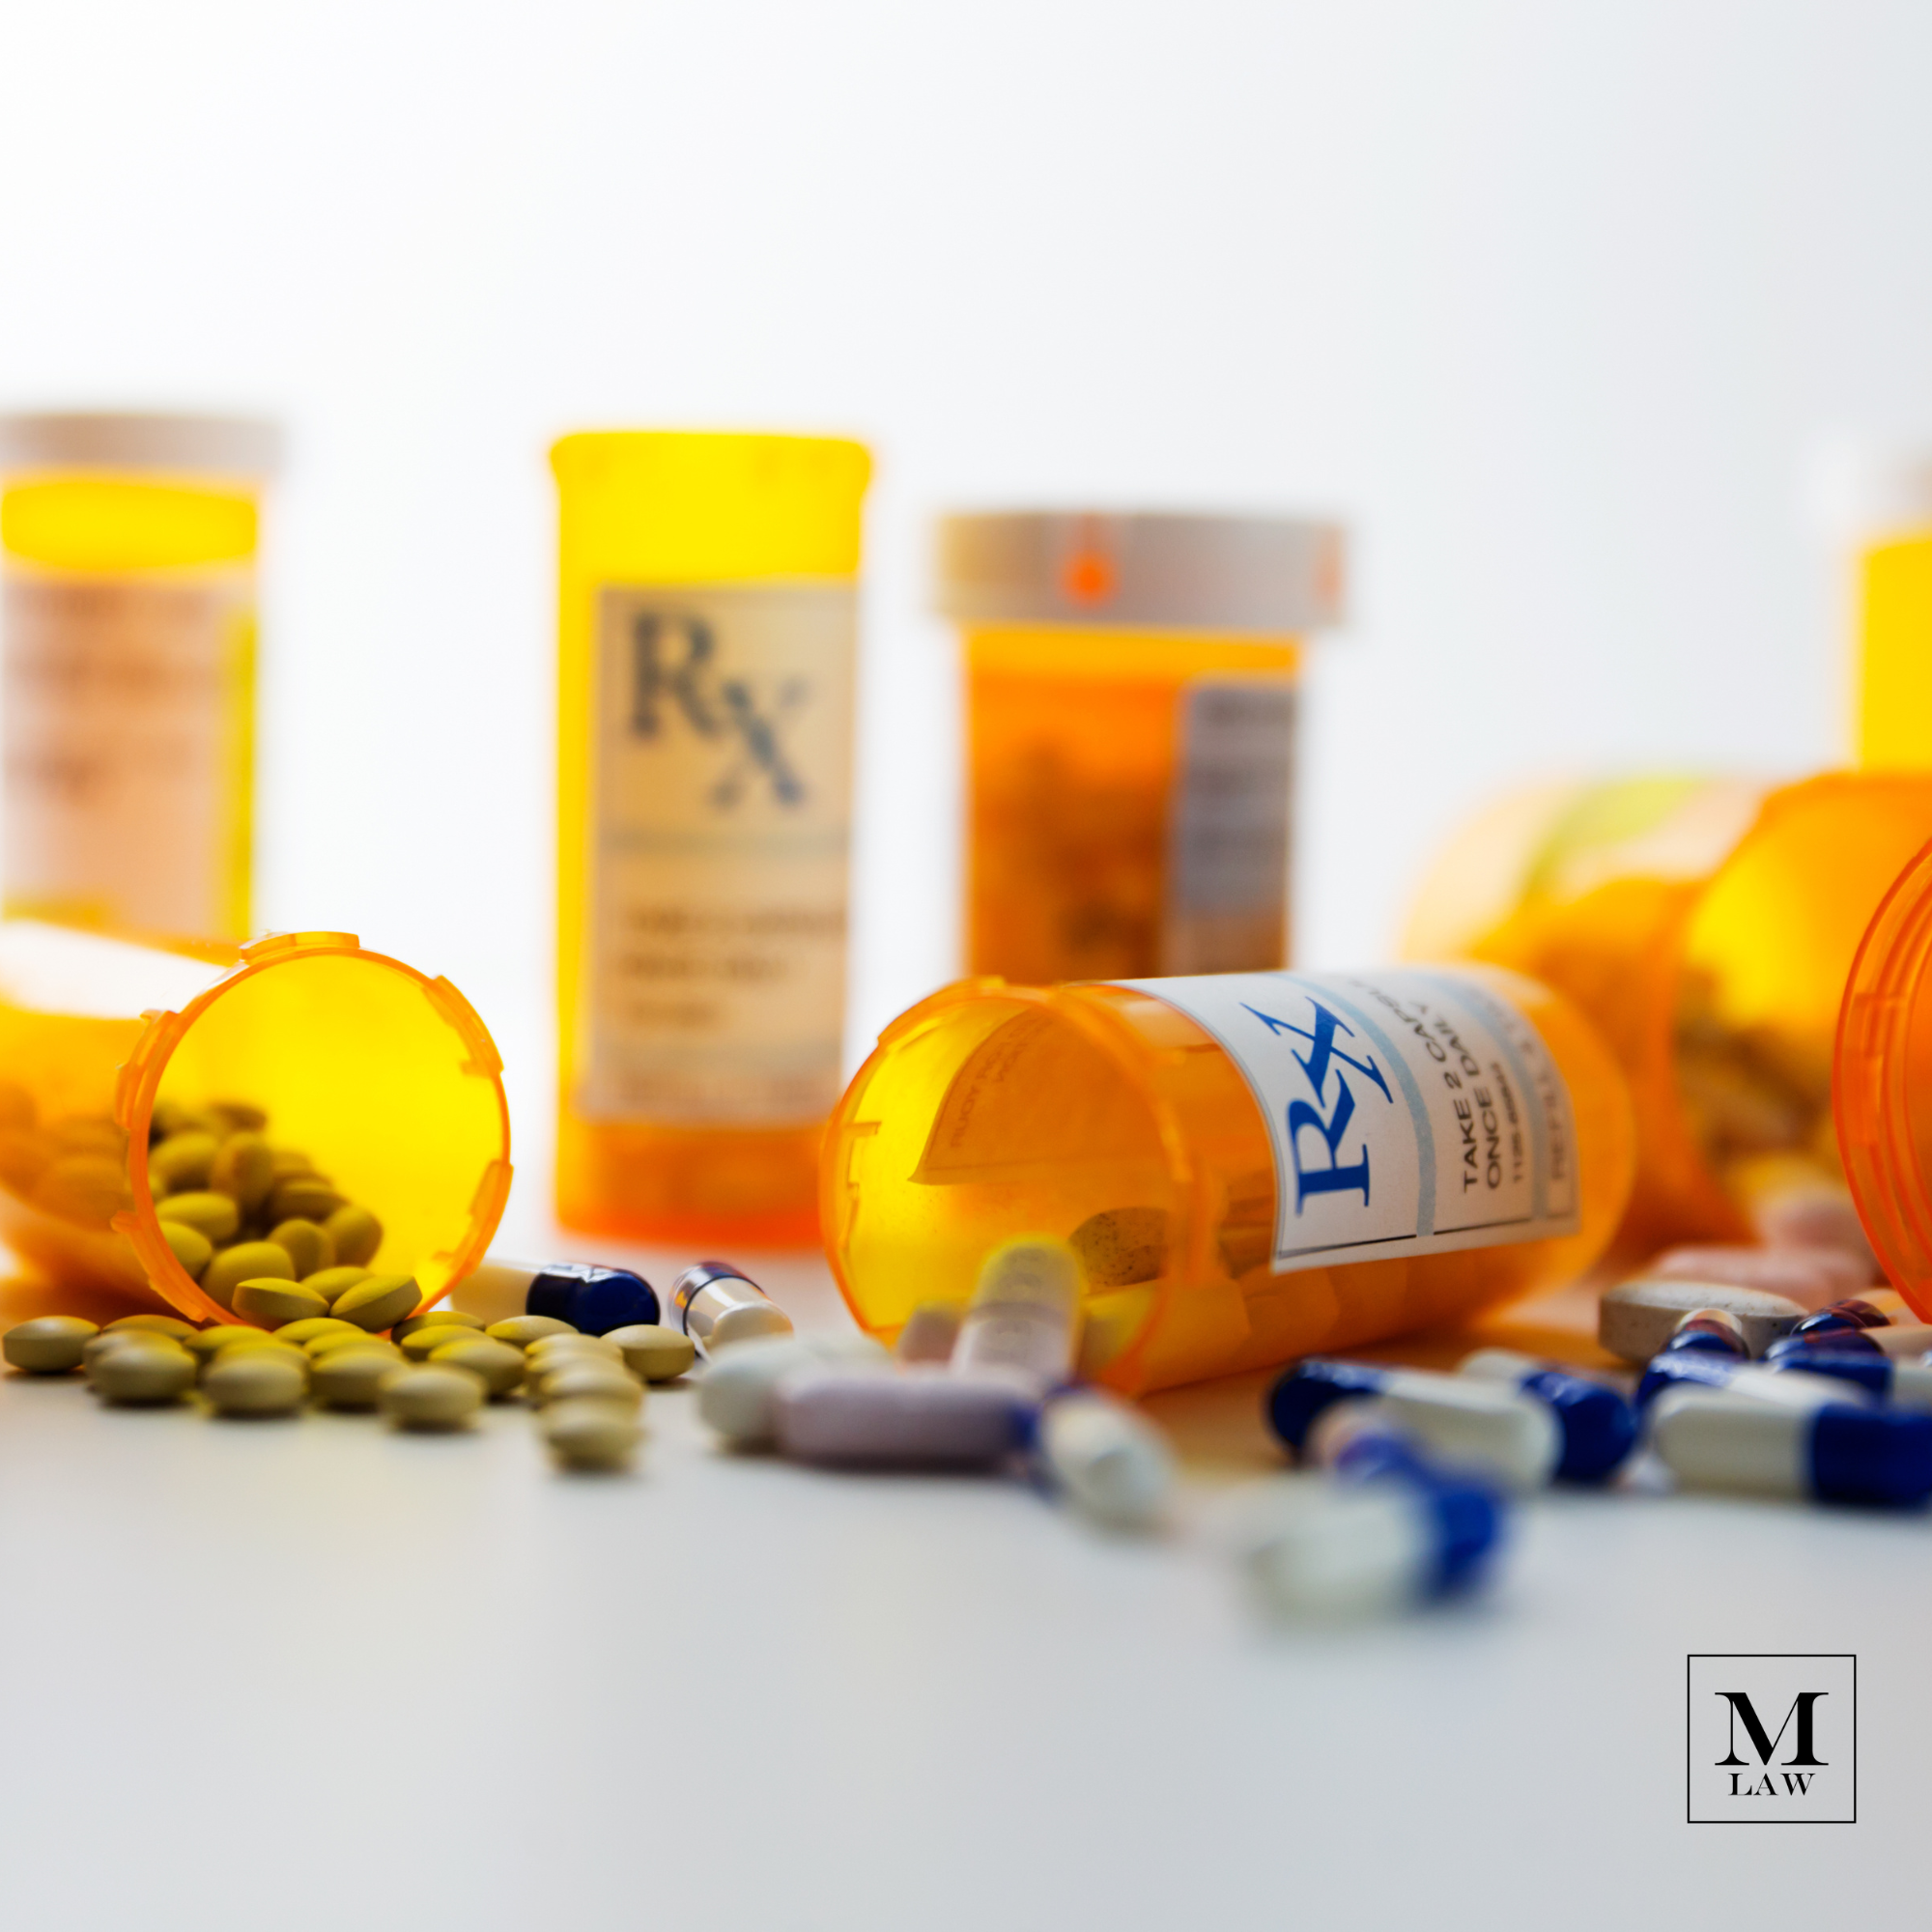 prescription pill bottles mislabeled due to medication errors